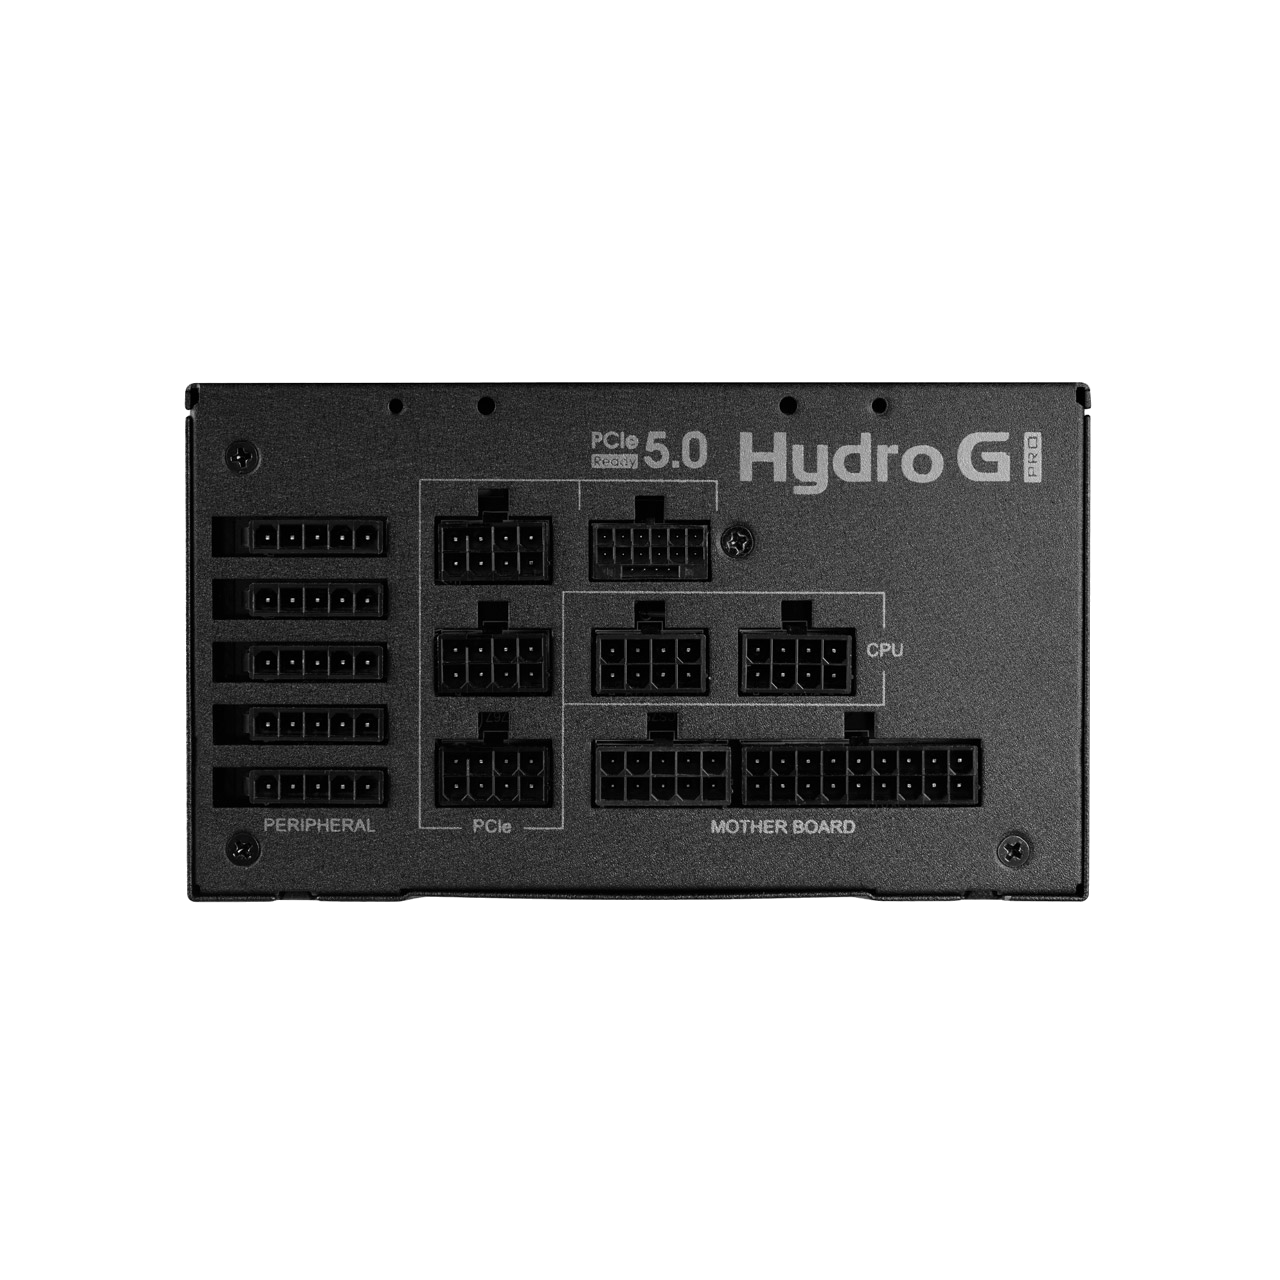 FSP Hydro G Pro 1000W 80+ Gold (PCIe 5.0) Fully Modular Power Supply | PPA10A2415 | - Vektra Computers LLC